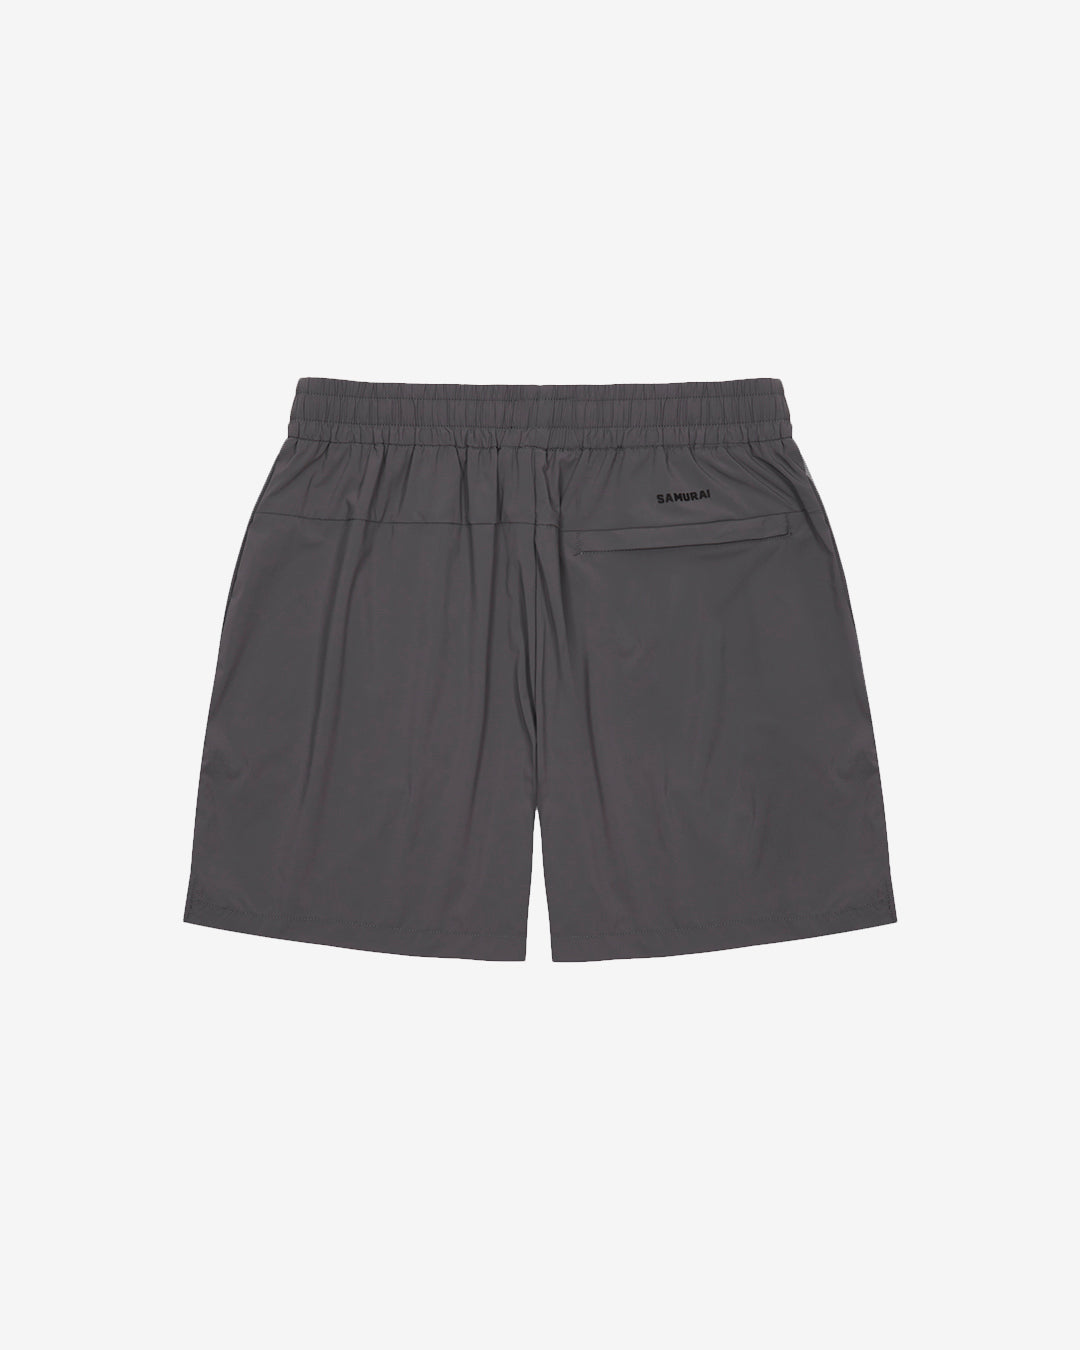 EE:S12 - Nylon Shorts - Charcoal Grey